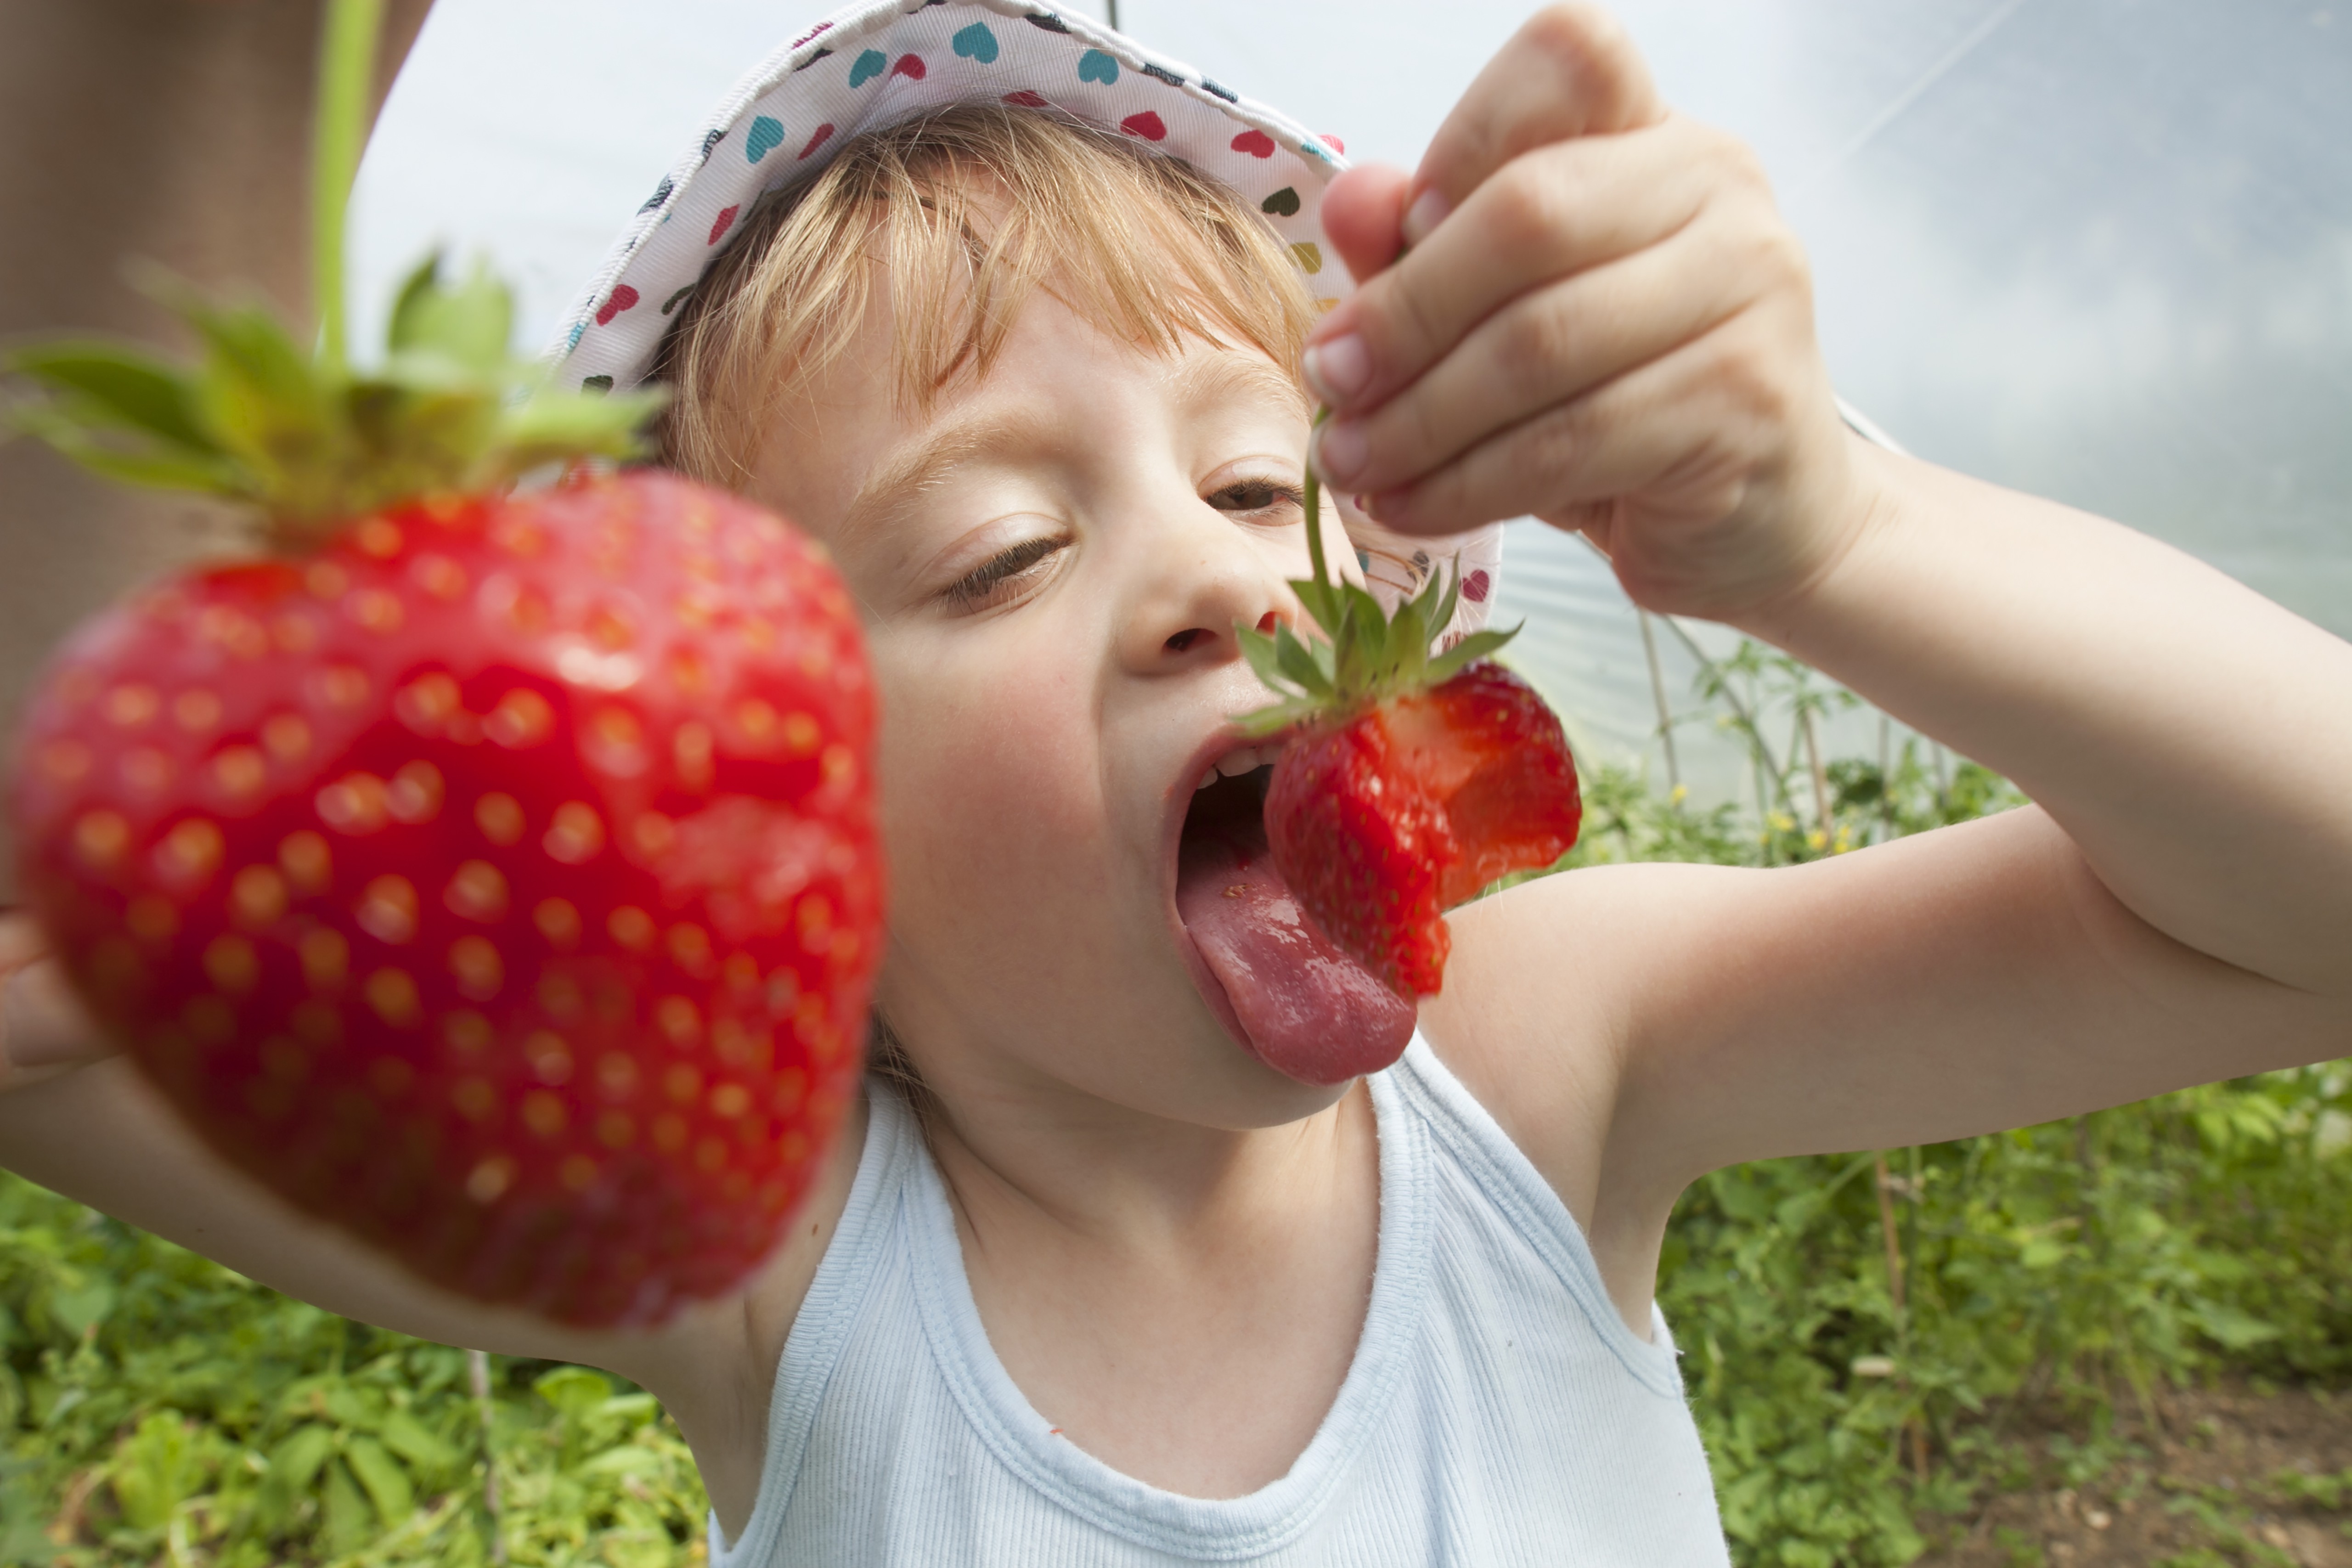 Alergia x intolerância alimentar: saiba as diferenças (Foto: Getty Images)